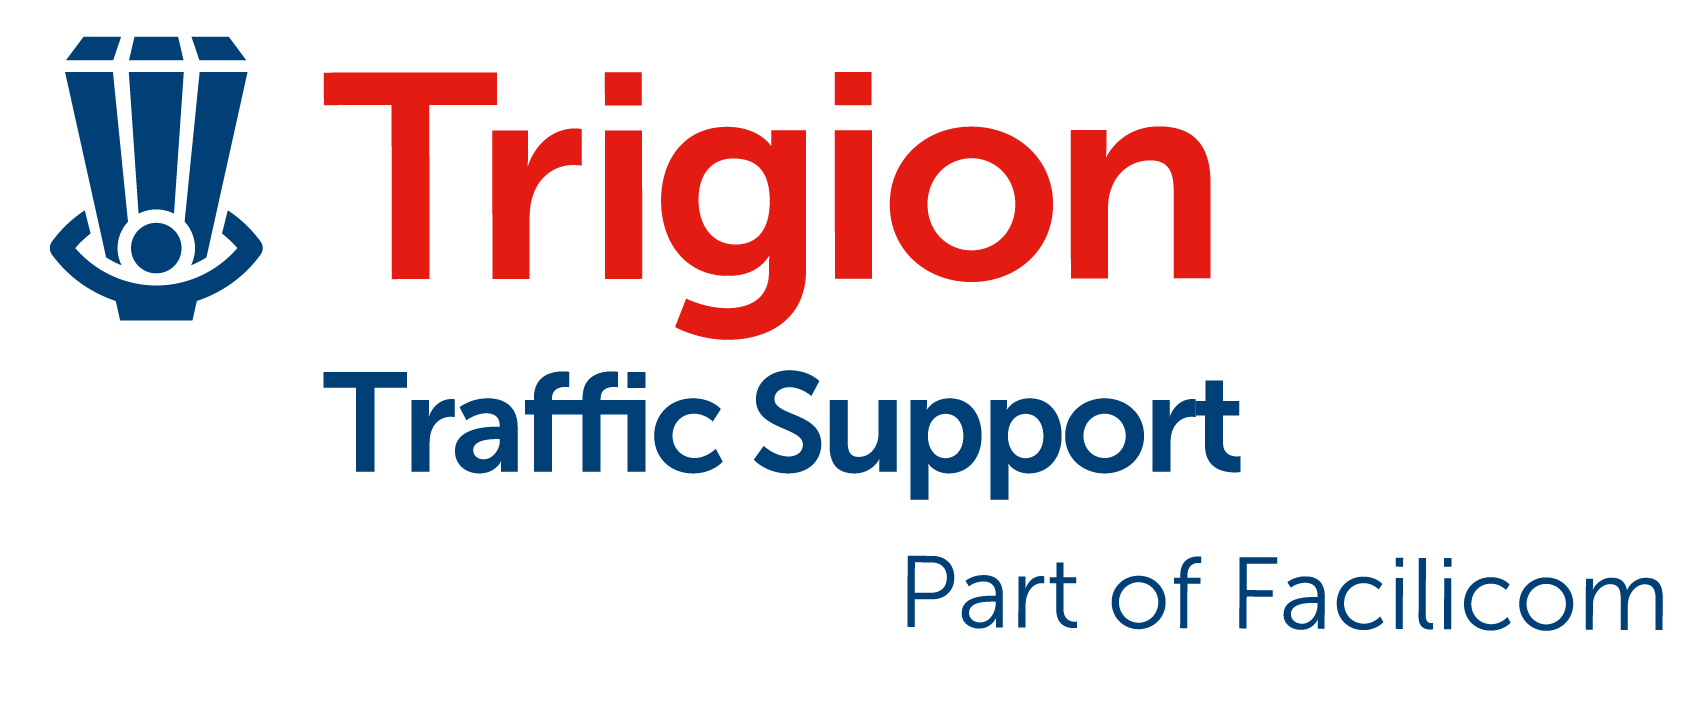 Trigion Traffic Support